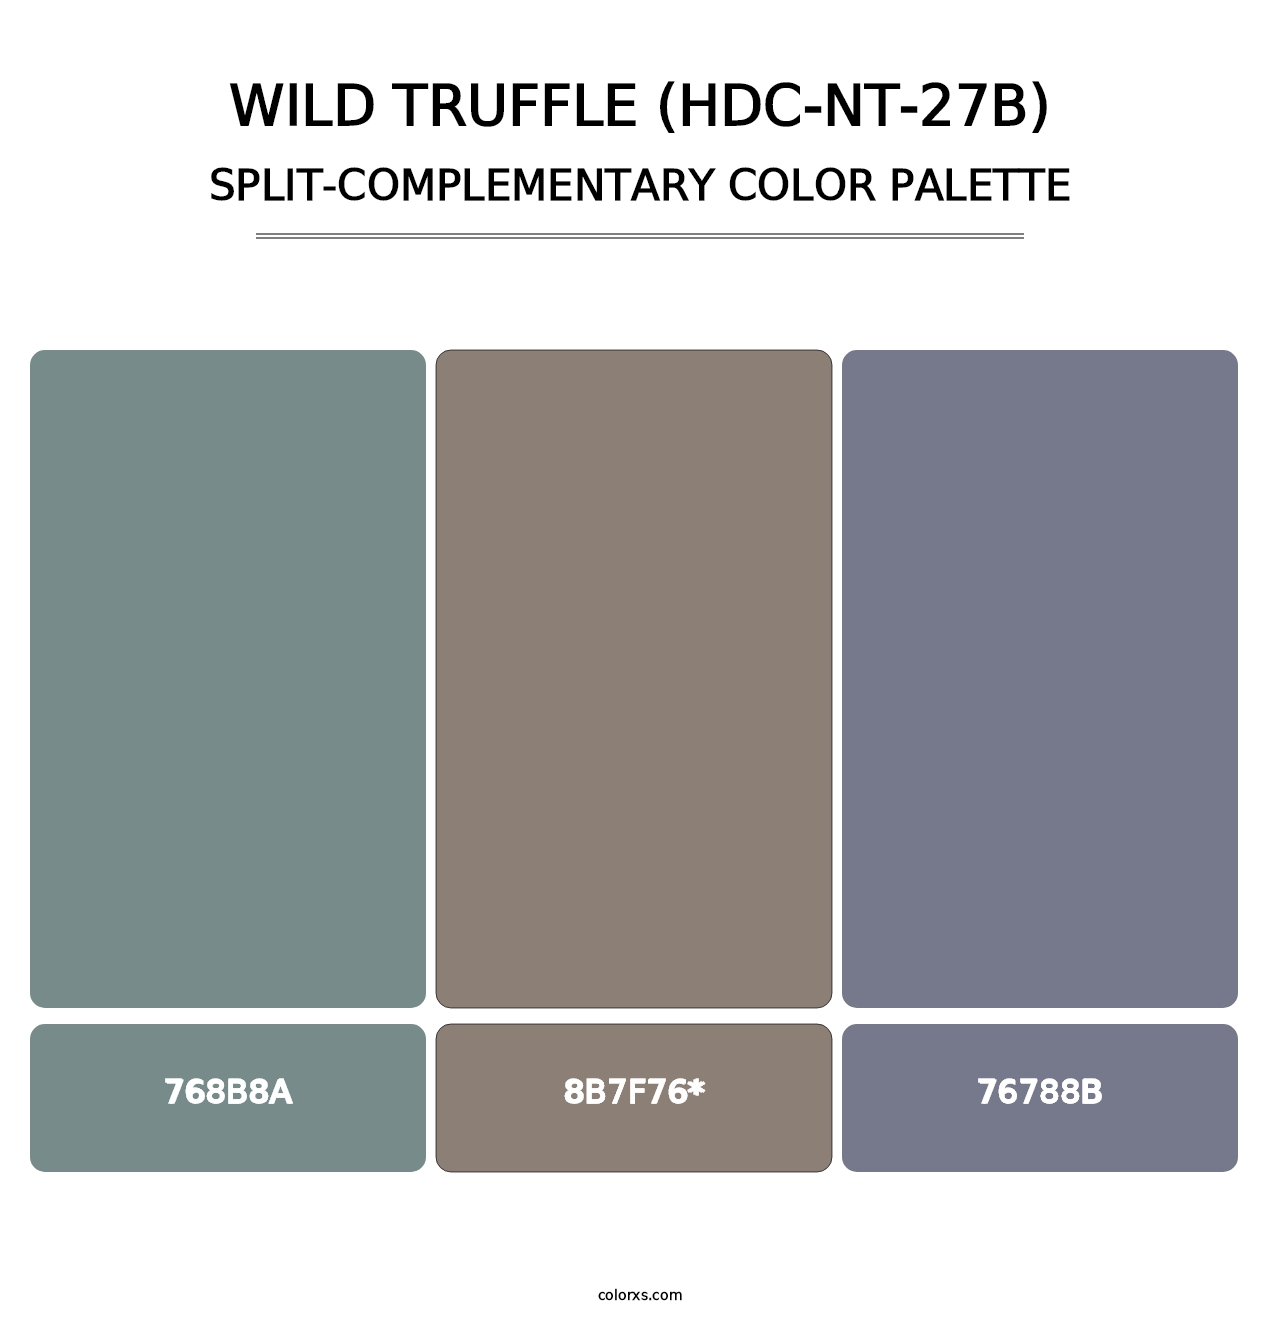 Wild Truffle (HDC-NT-27B) - Split-Complementary Color Palette